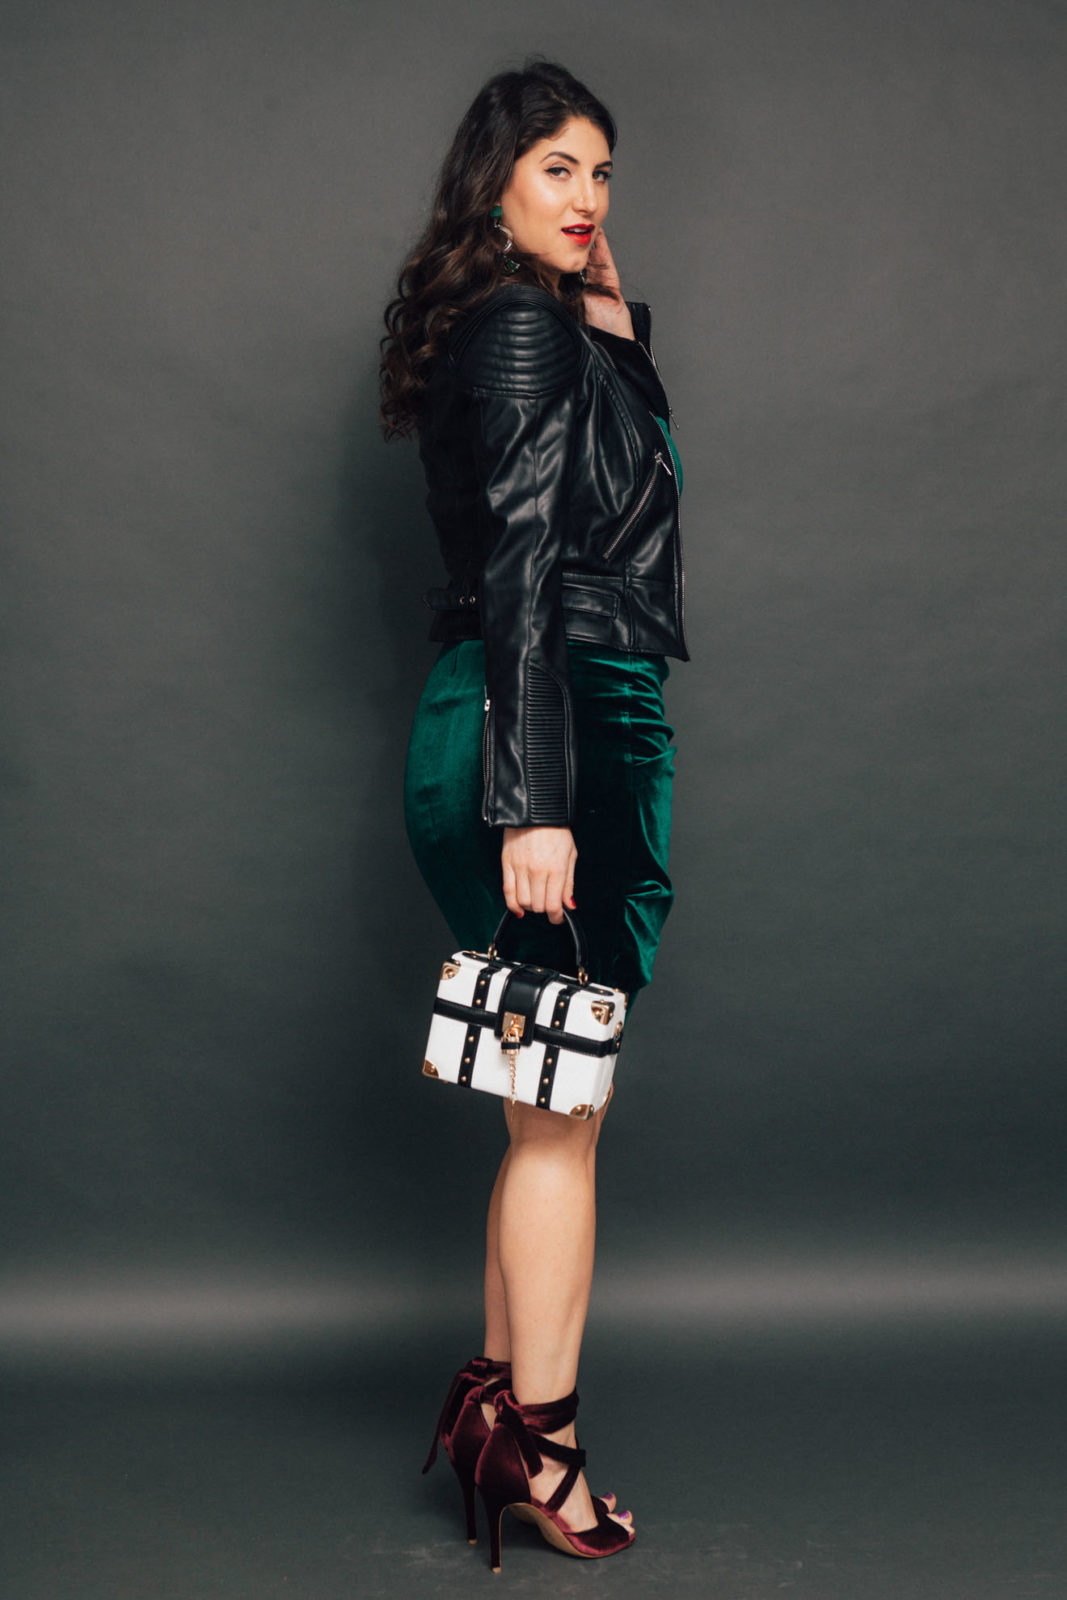 Velvet Outfits by Los Angeles Fashion Blogger Laura Lily, Michael Costello x REVOLVE velvet dress,